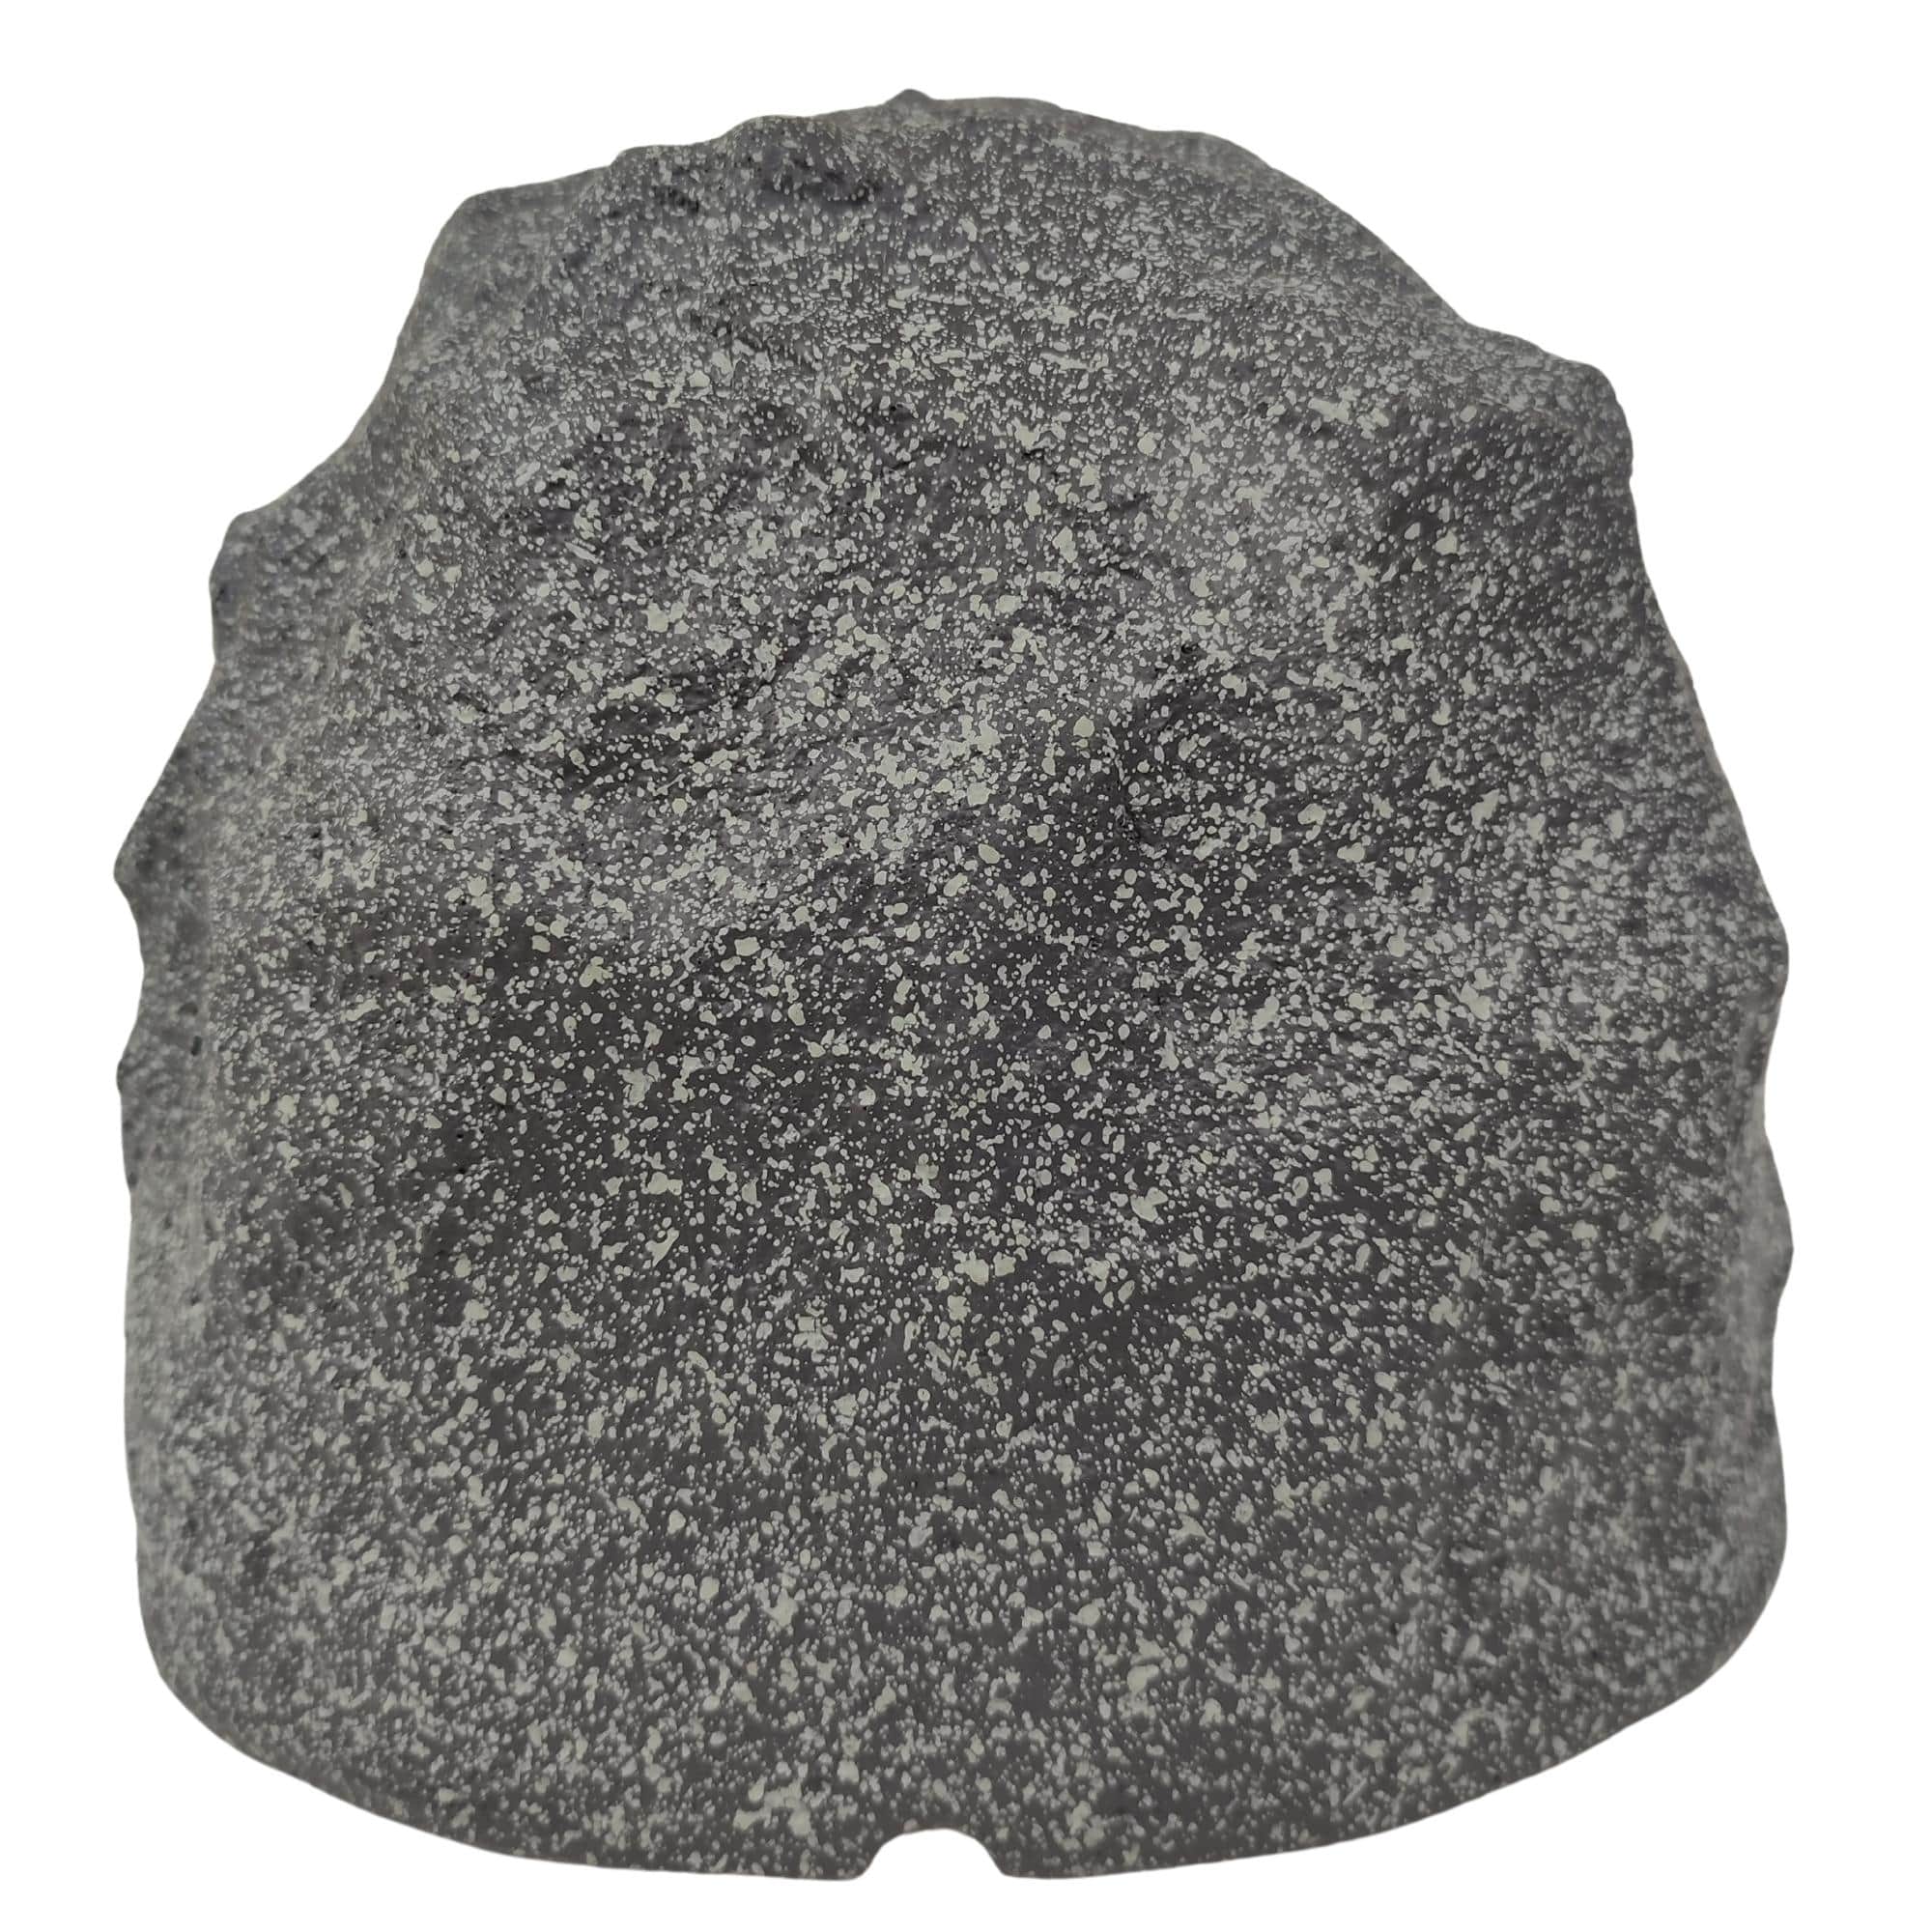 Jamo Rock JR-5 Granite back